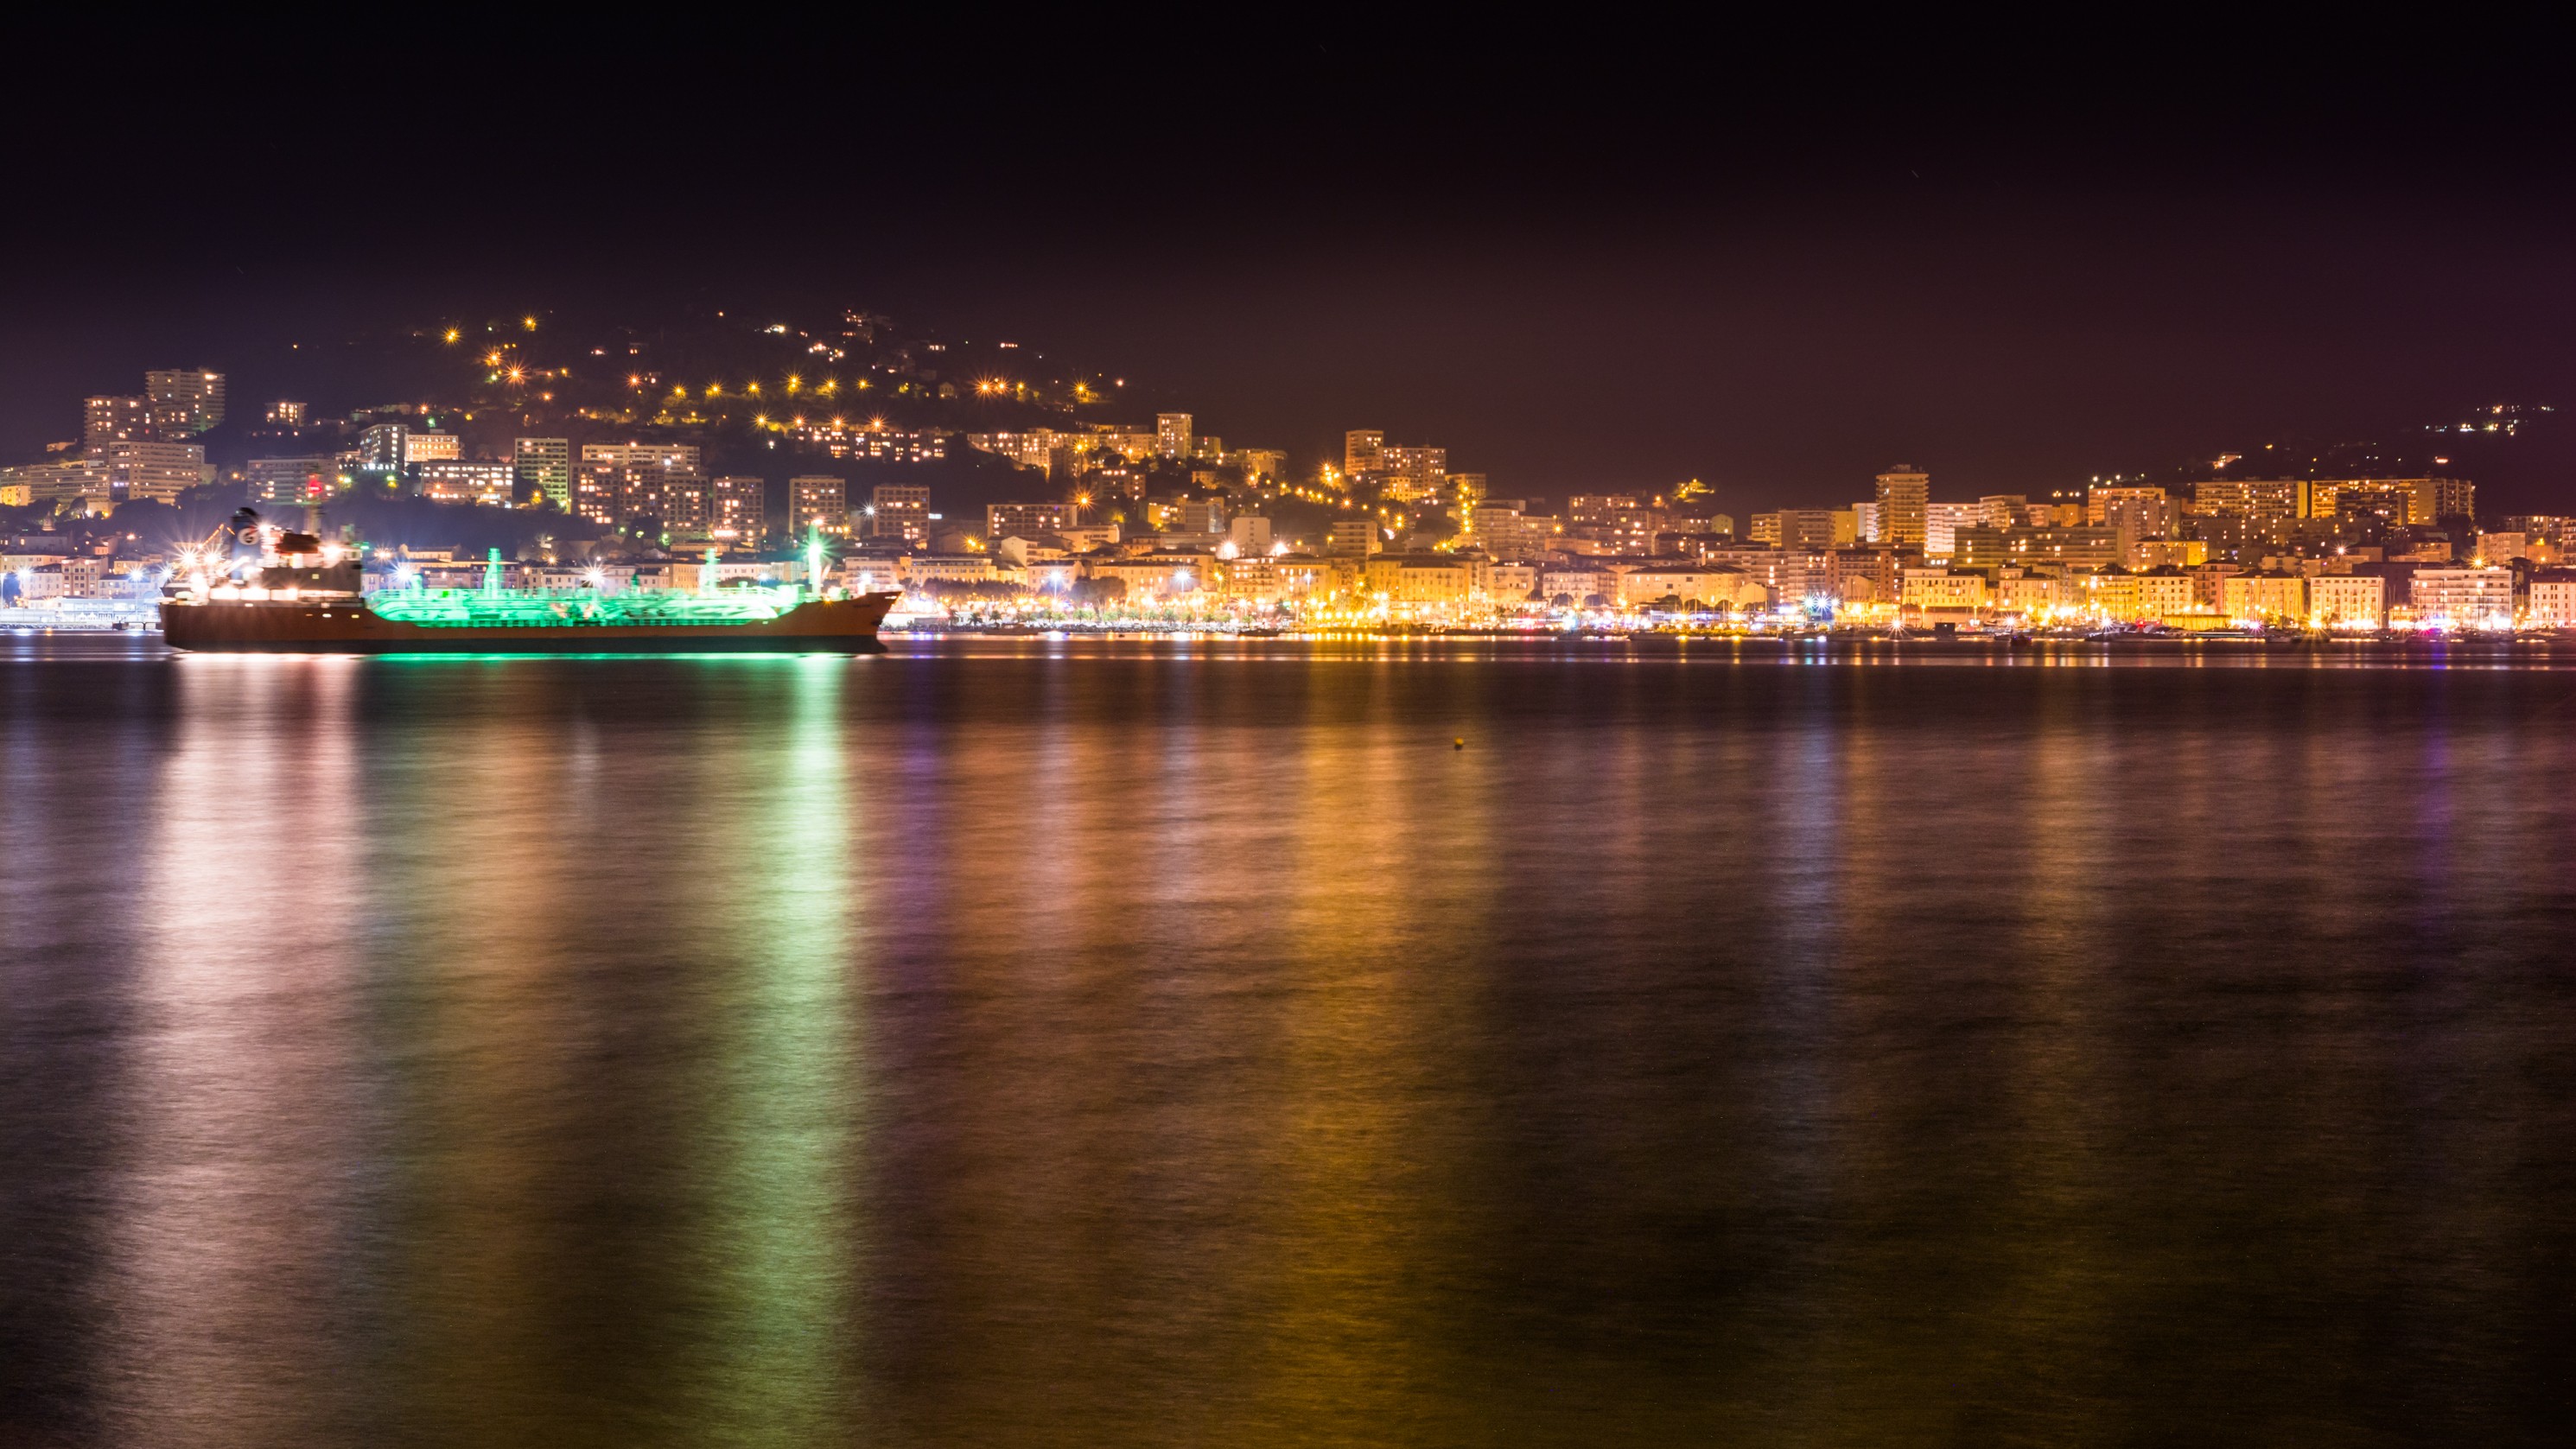 General 2981x1677 Ajaccio sea night lighter colorful cityscape lights vehicle ship city lights low light